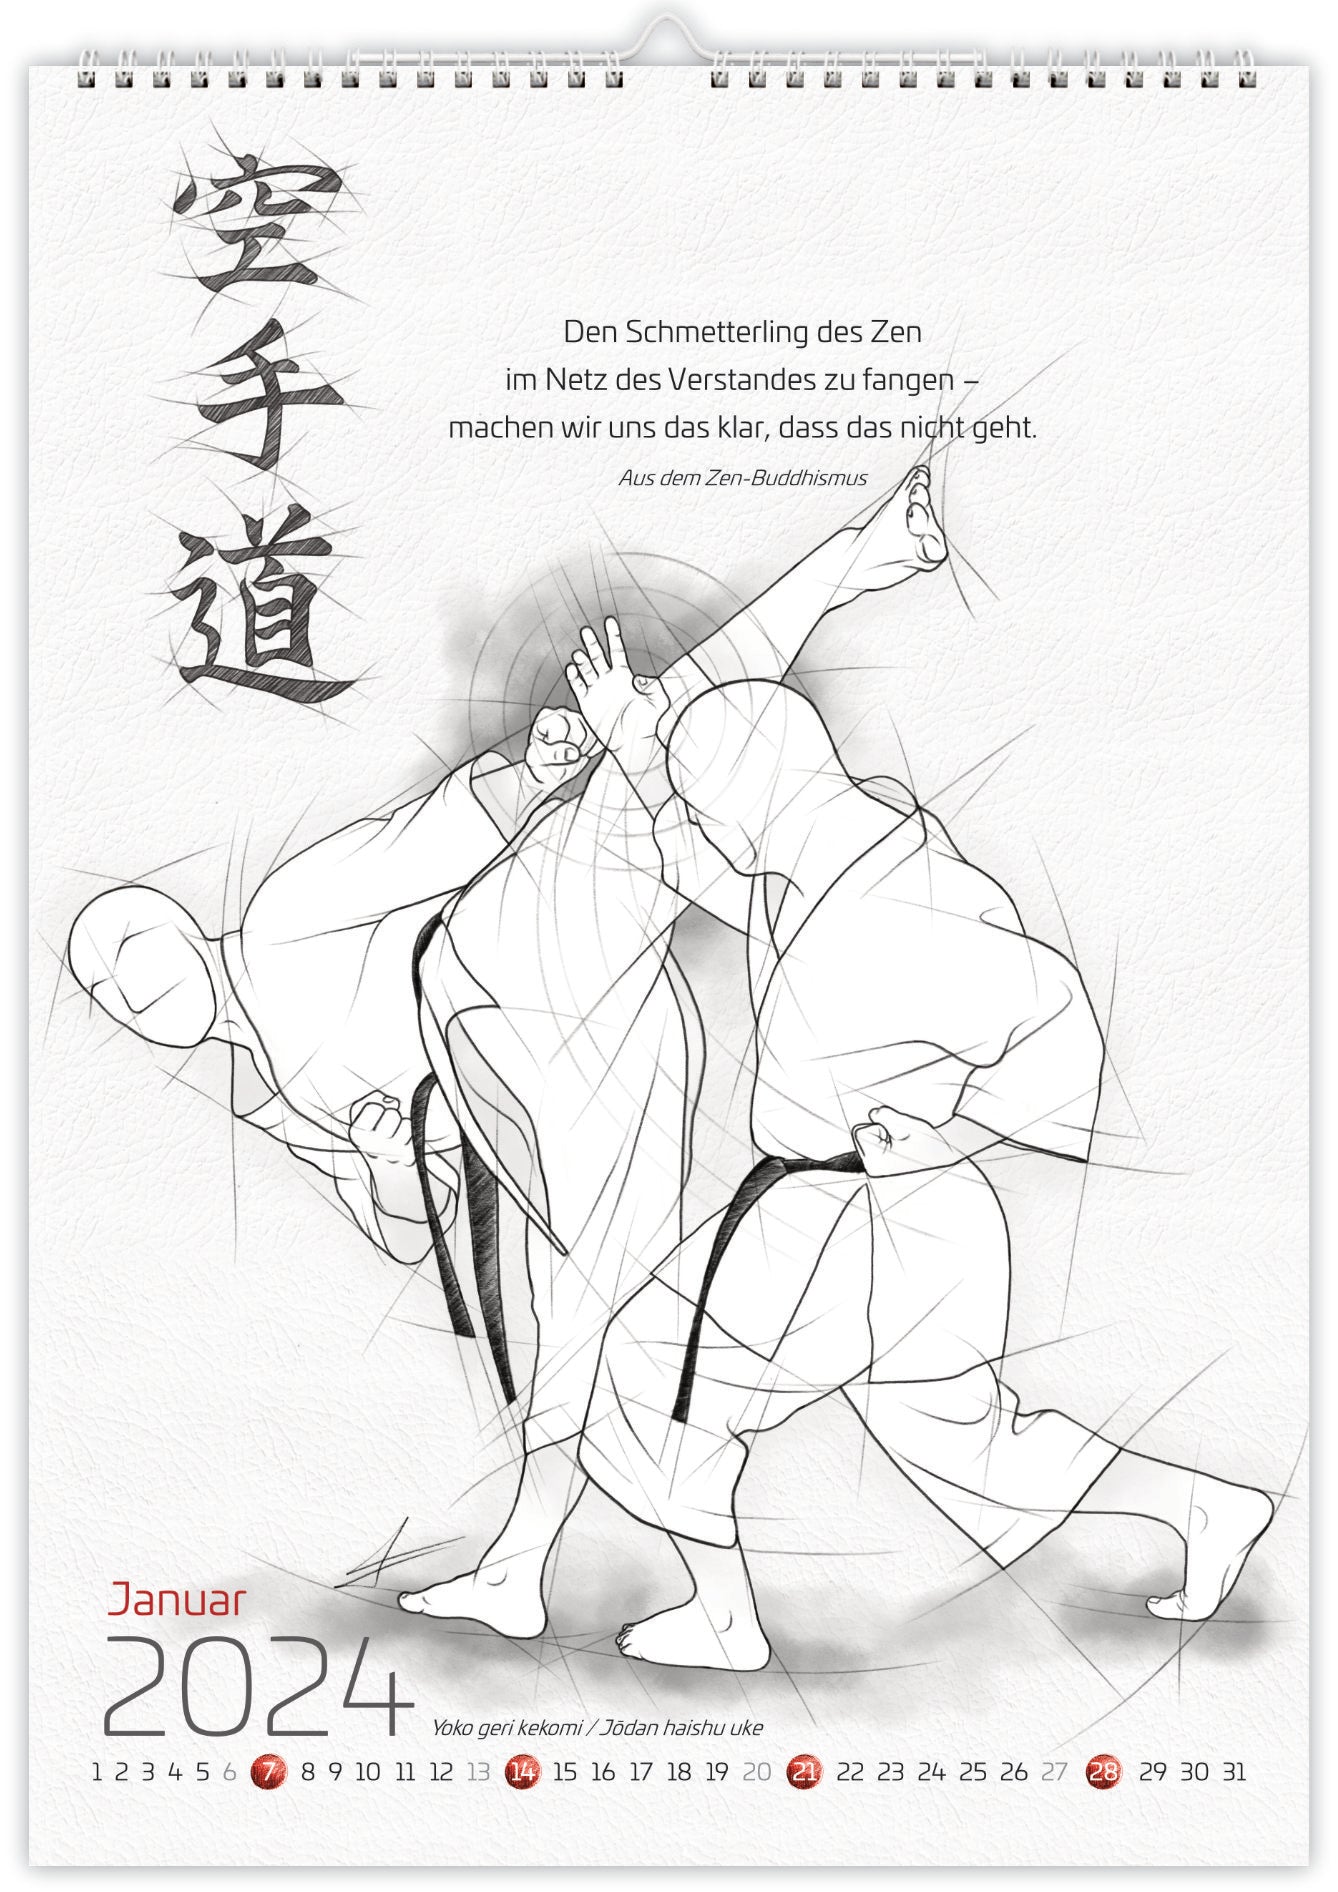 🇩🇪 Wall calendar | Karate 2024